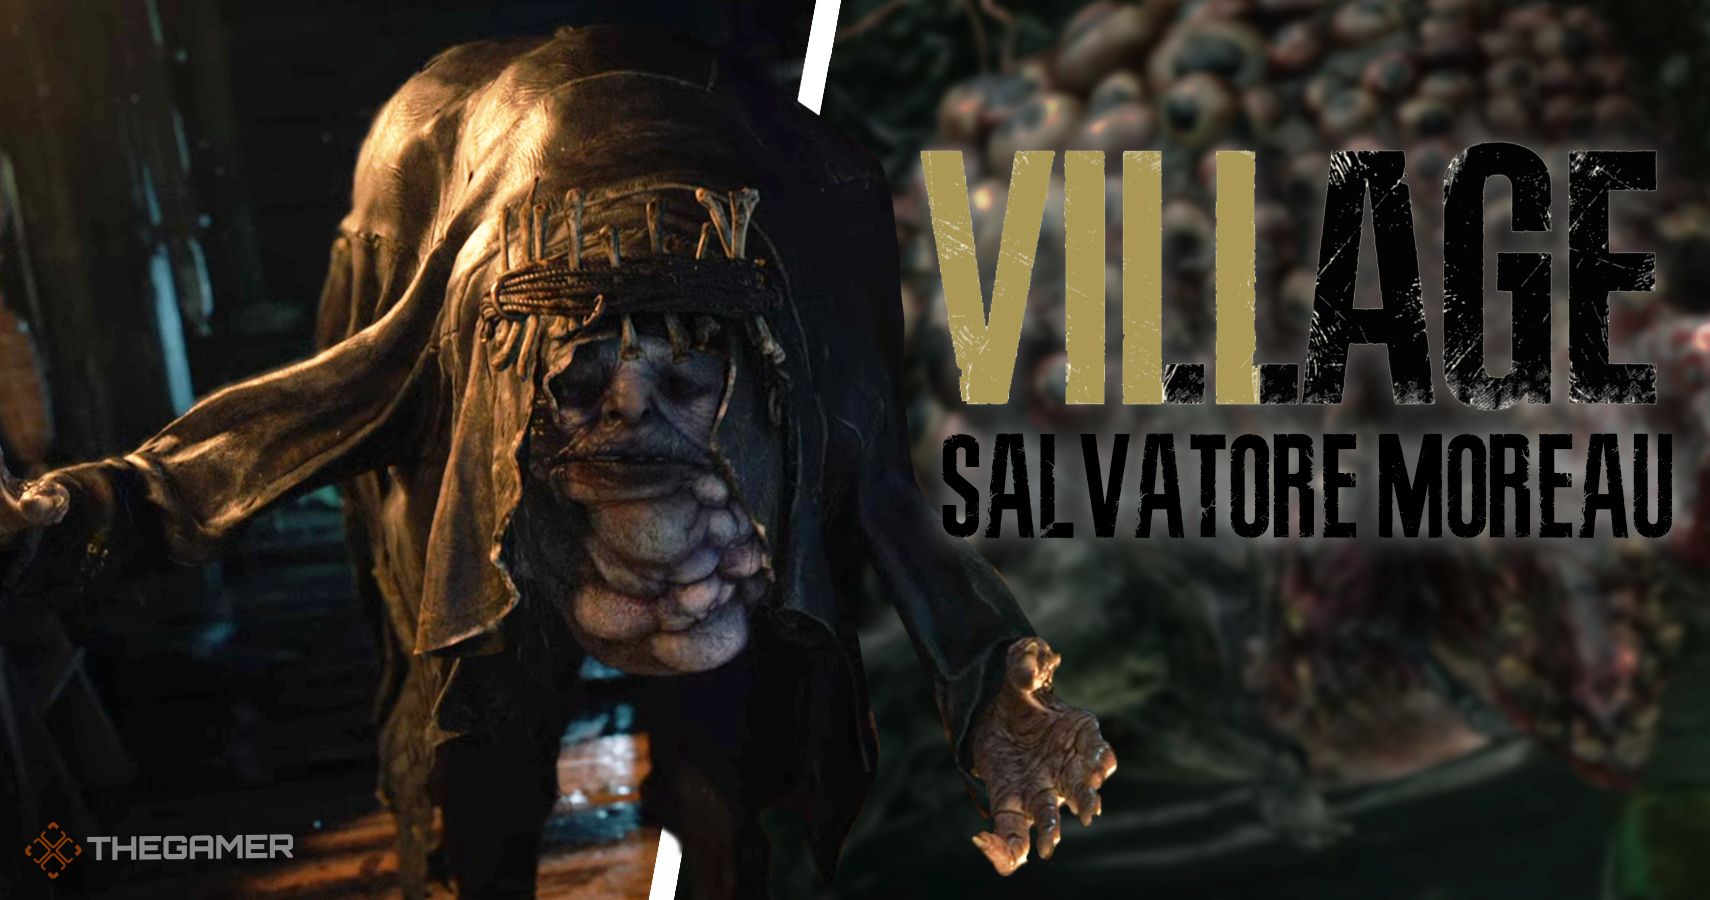 Resident Evil Village Salvatore Moreau Boss Guide - pokemonbig.com